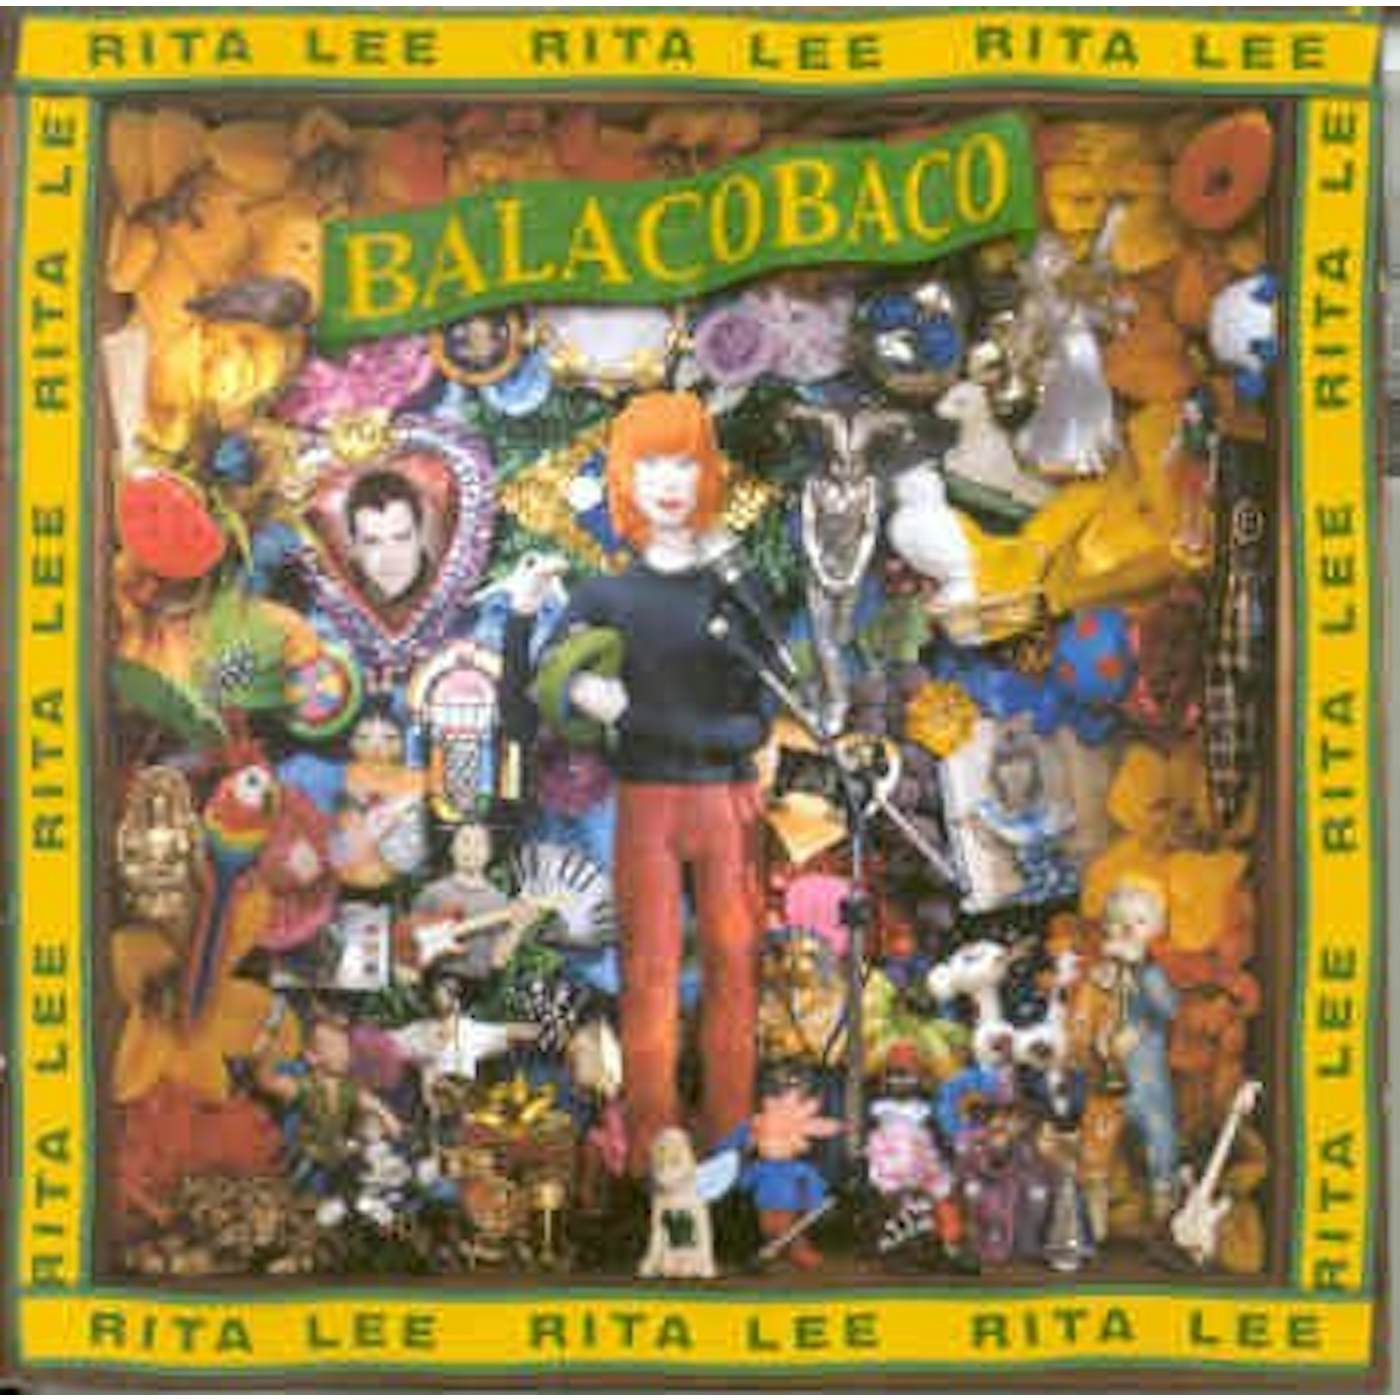 Rita Lee BALACOBACO CD